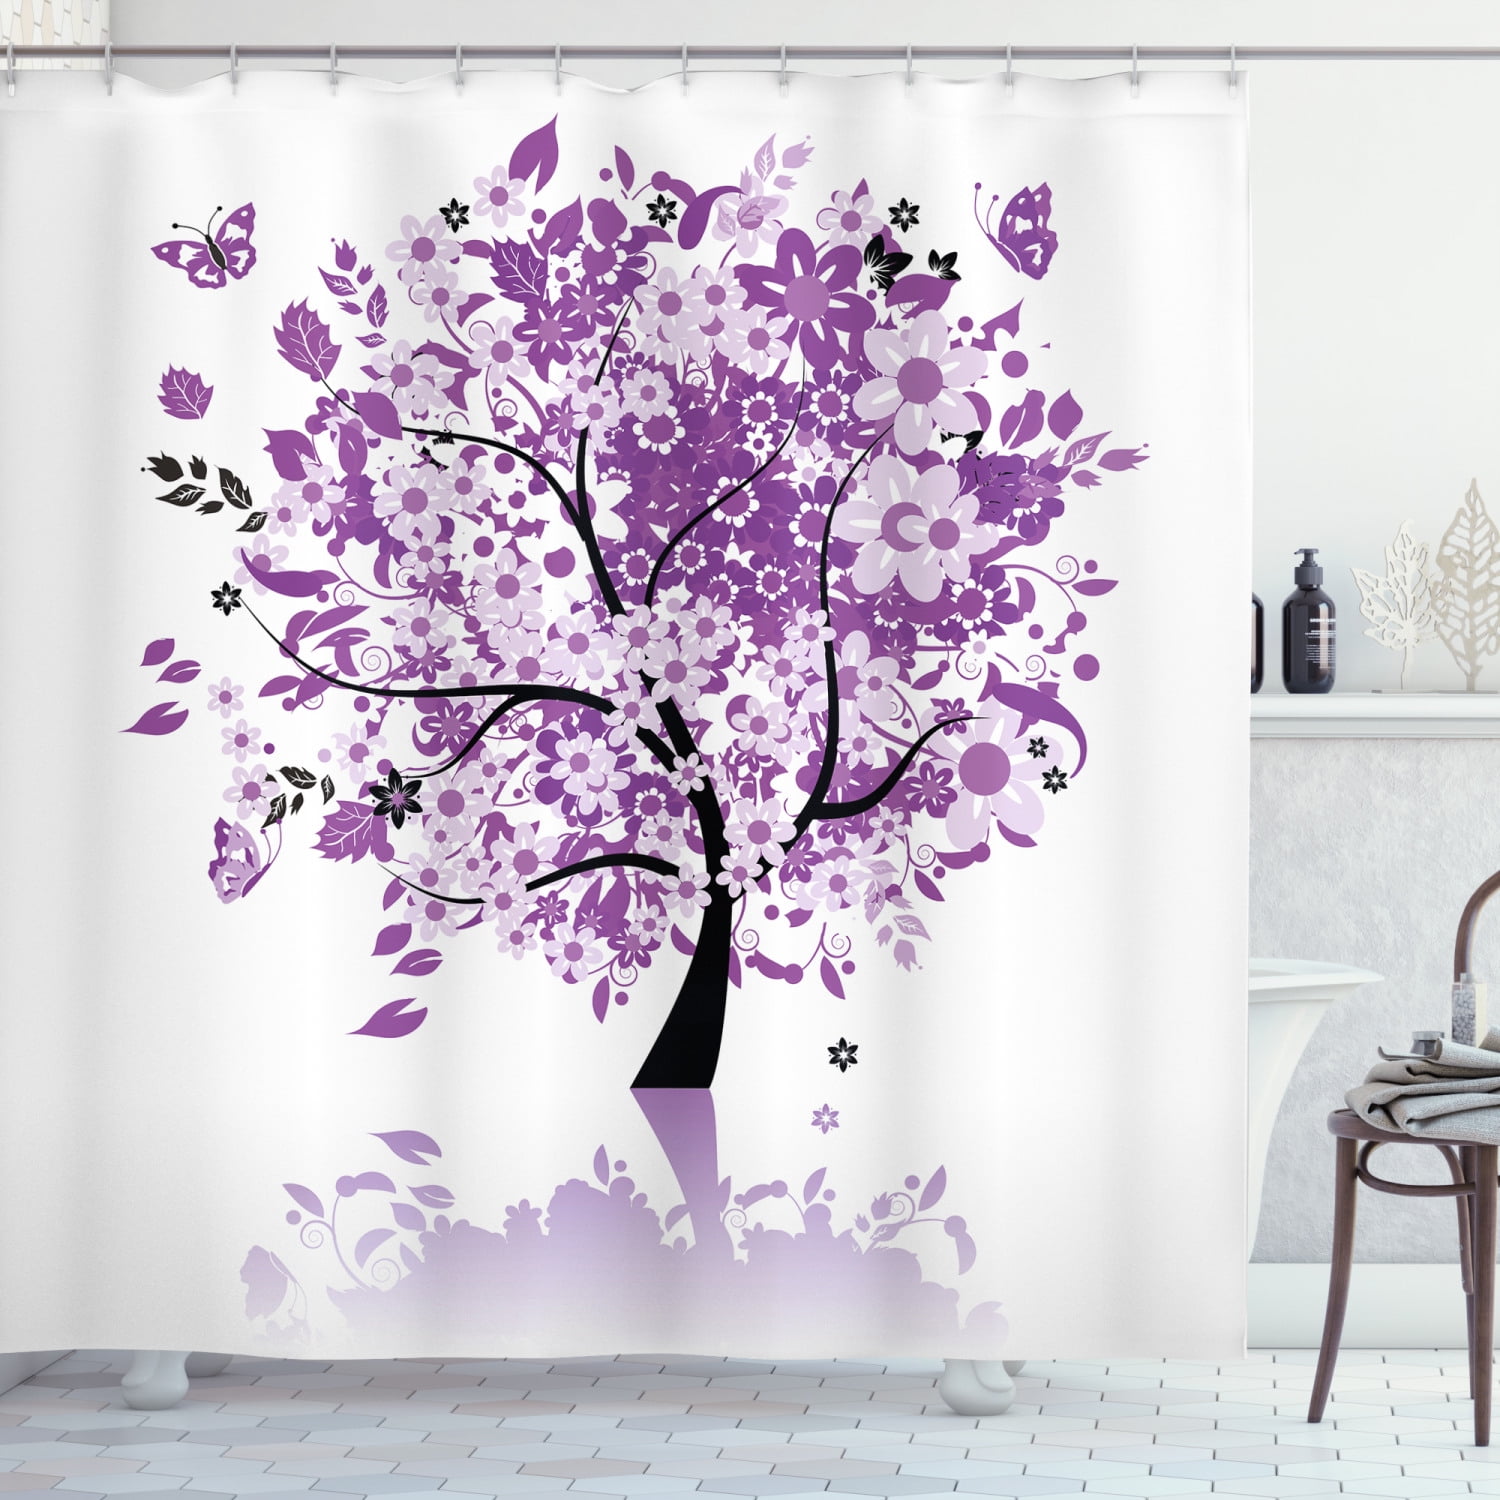 Gradient Background Butterfly Flowers 79" Waterproof Fabric Shower Curtain Hooks 